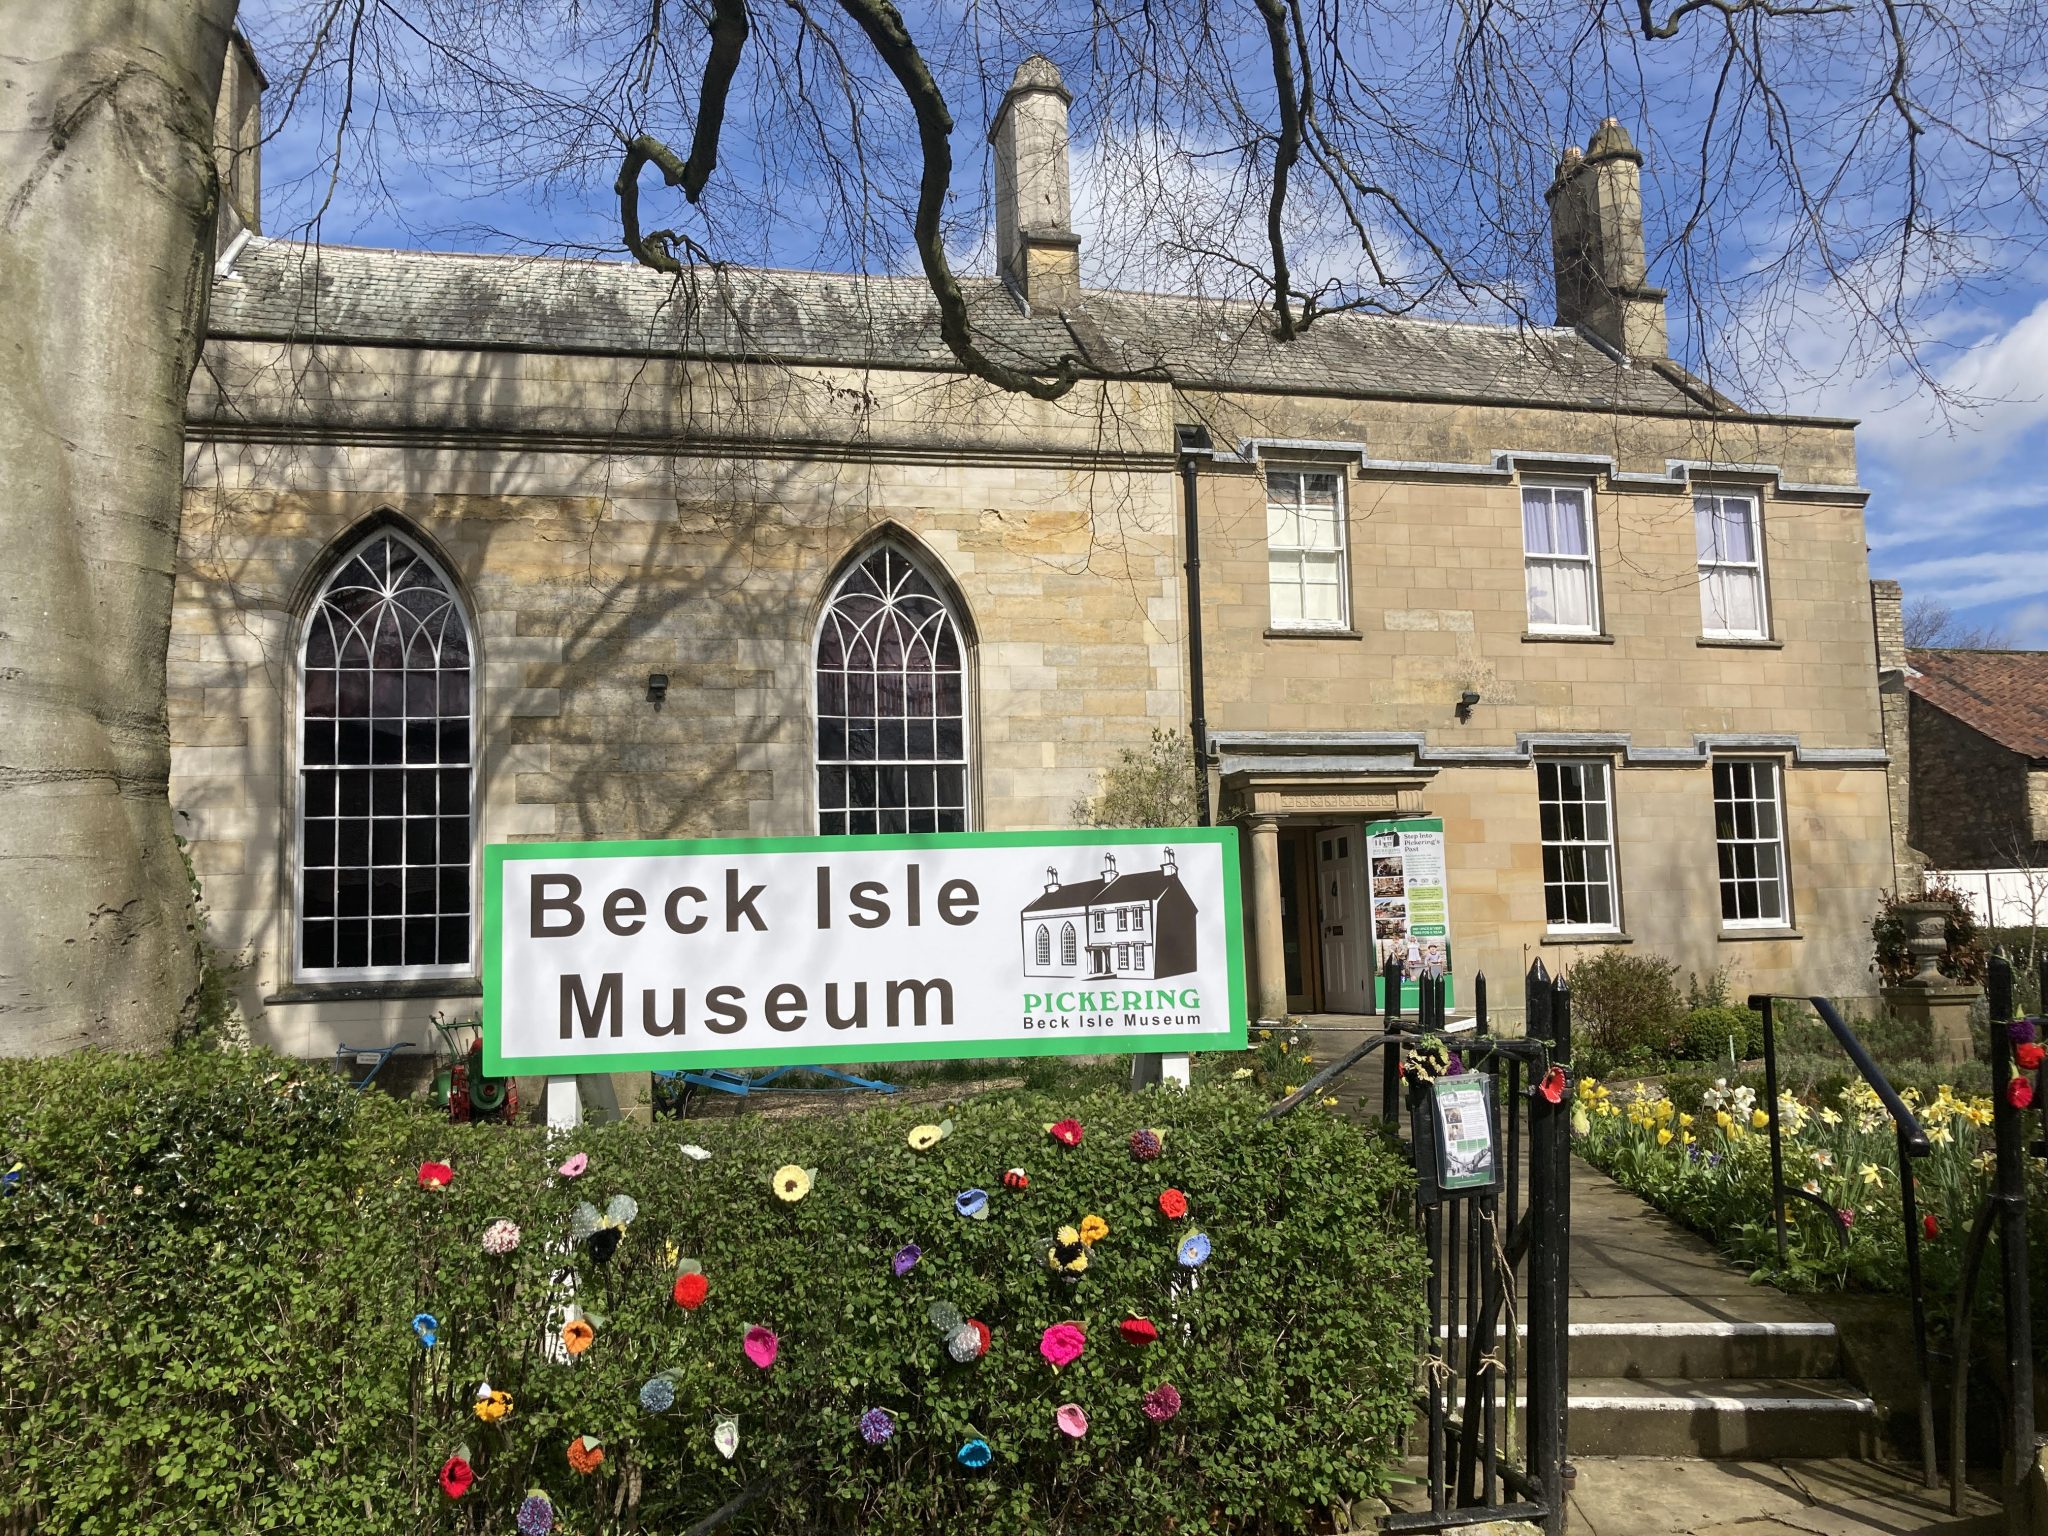 Beck Isle Museum